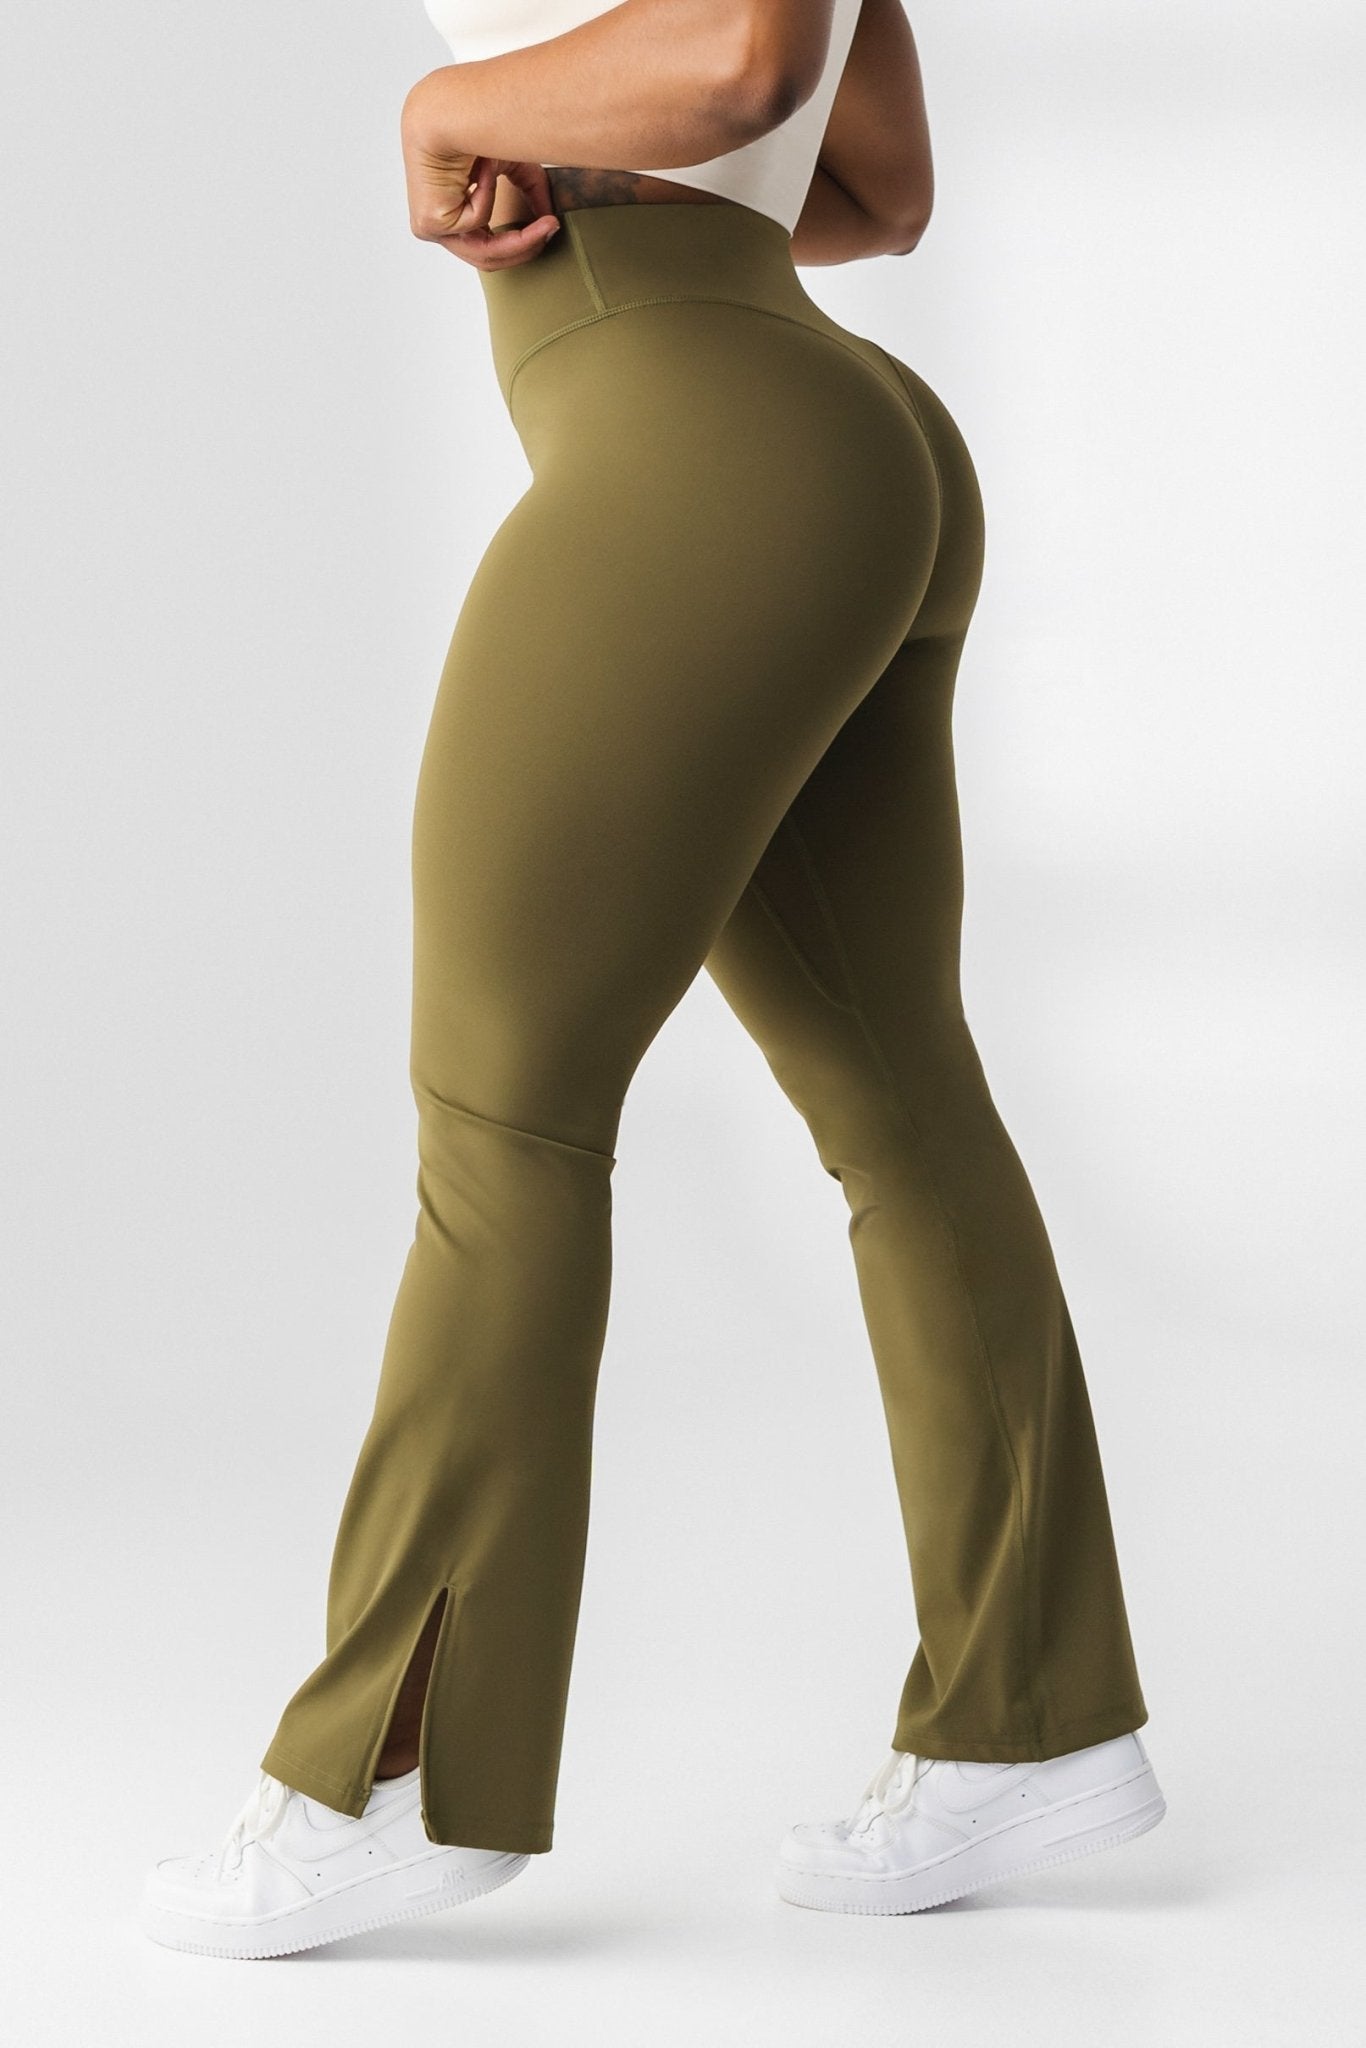 The Cloud Flare Pant - Women's Army Green Yoga Pants – Vitality